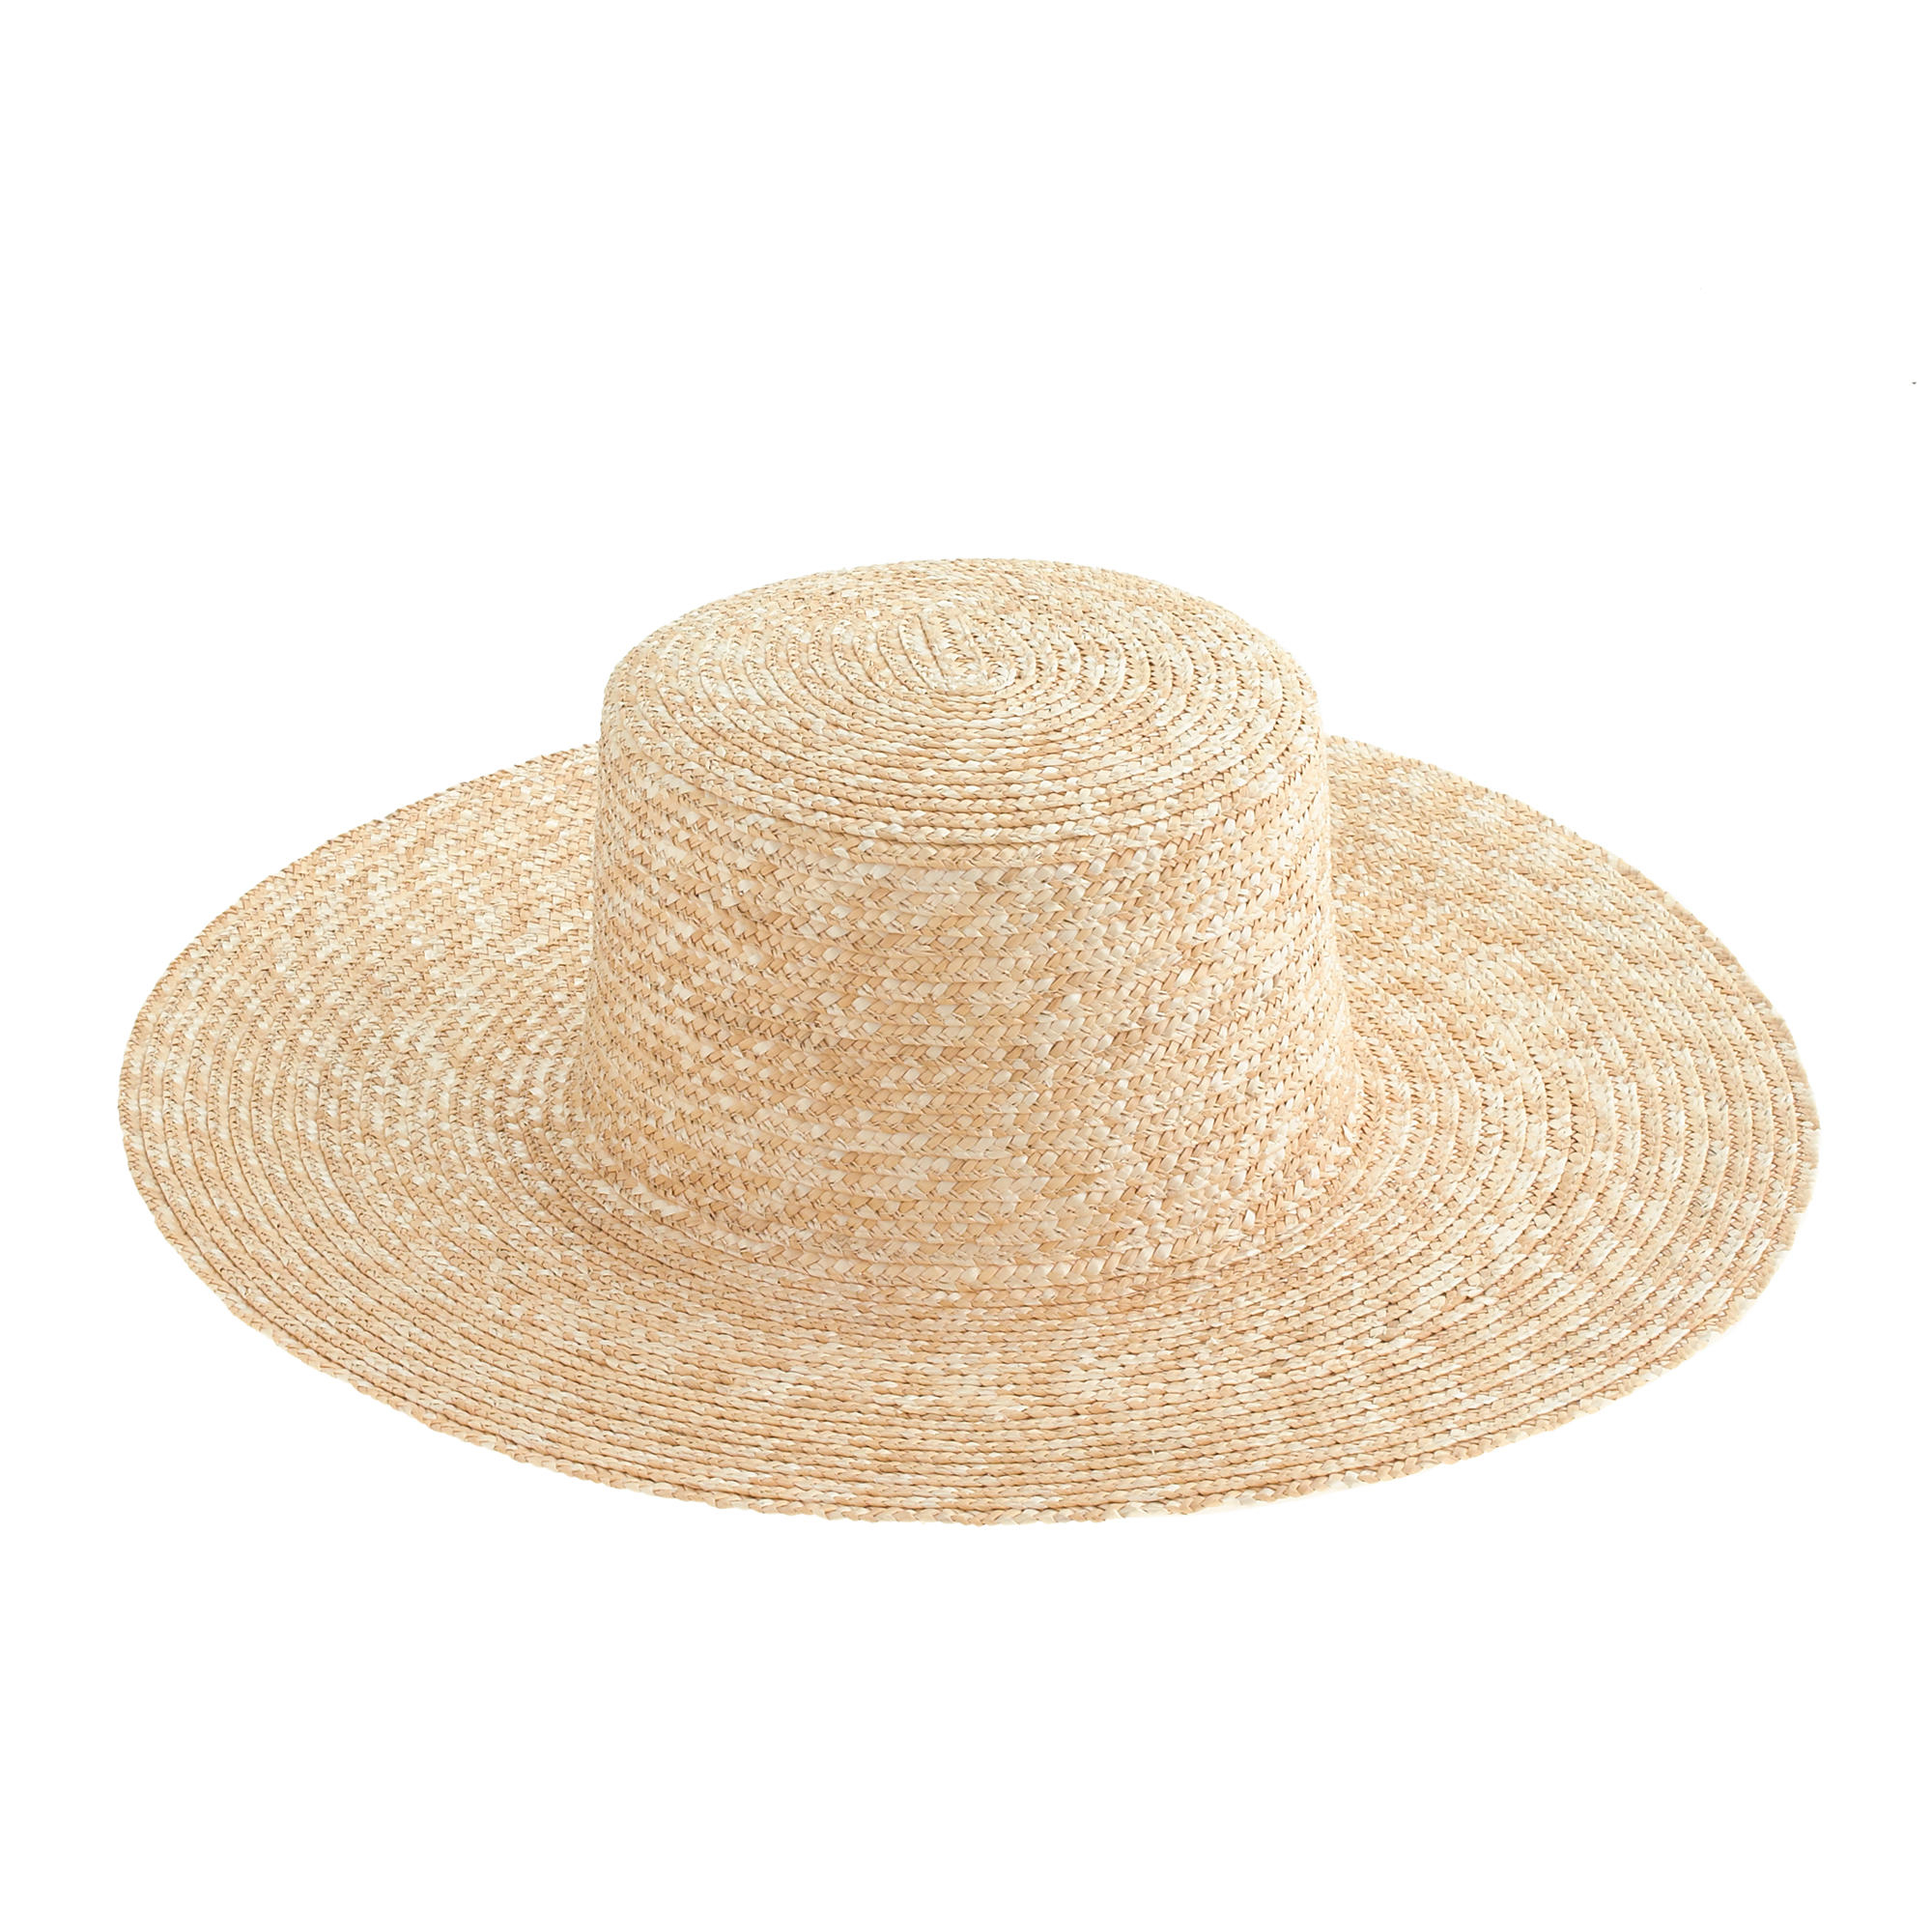 Lyst - J.Crew Wide-brimmed Straw Beach Hat in Natural